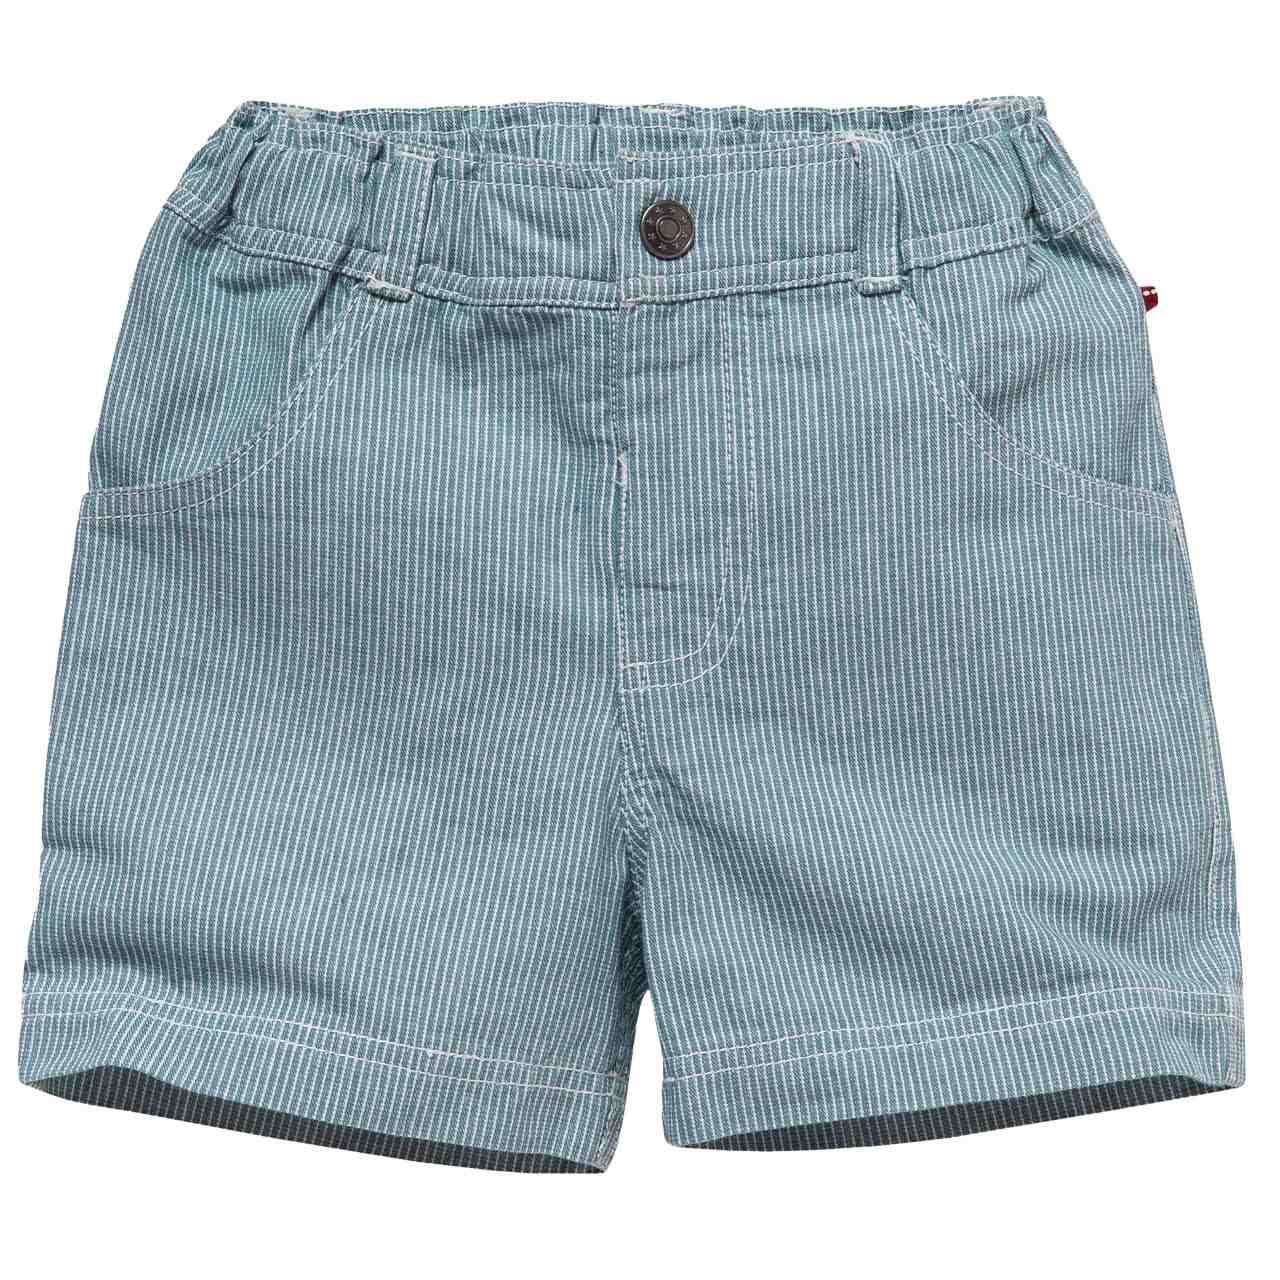 Baumwoll Shorts jeansblau gestreift